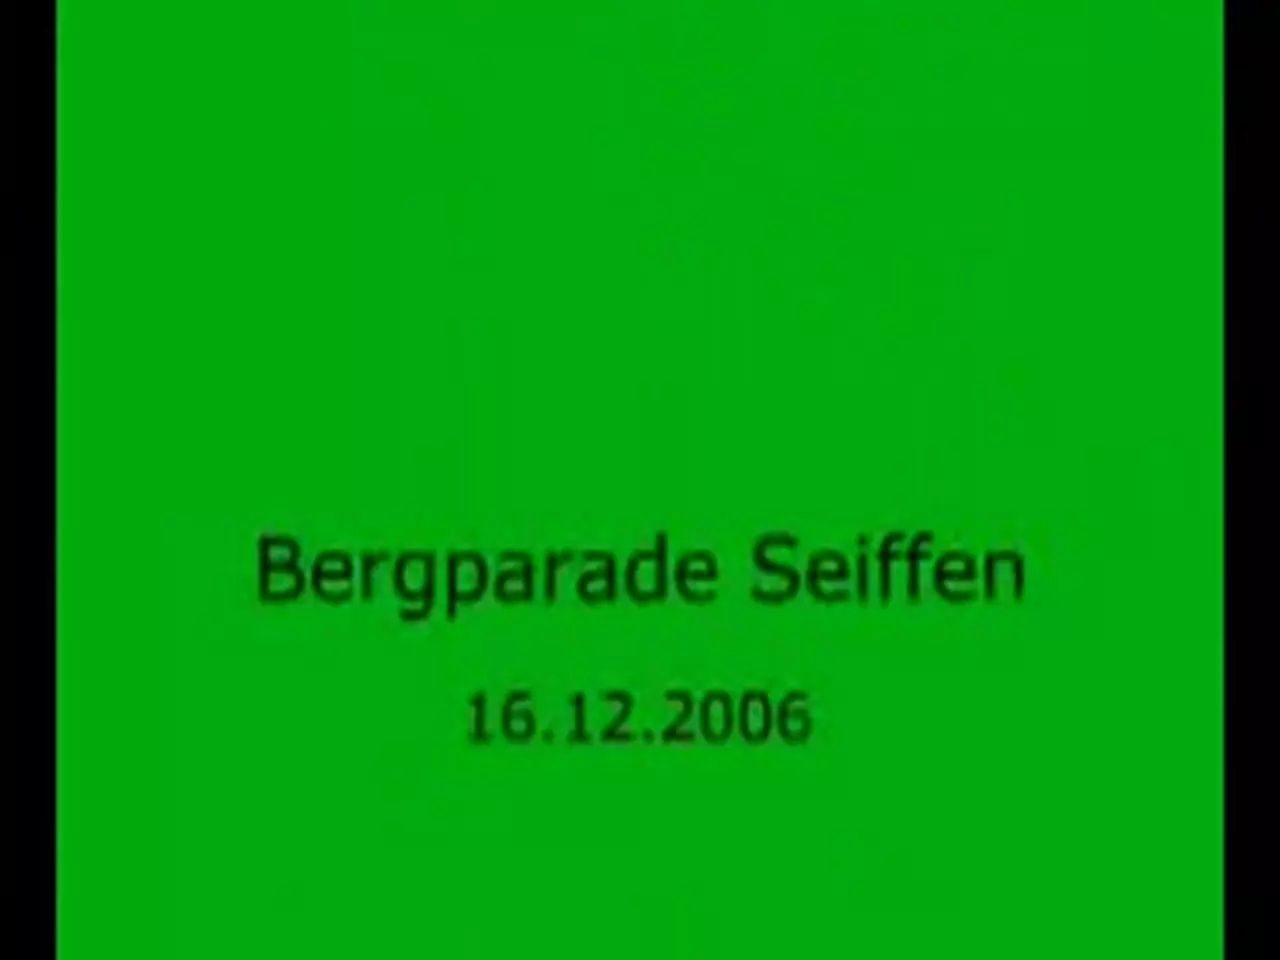 Foto: Bergparade in Seiffen 16.12.2006